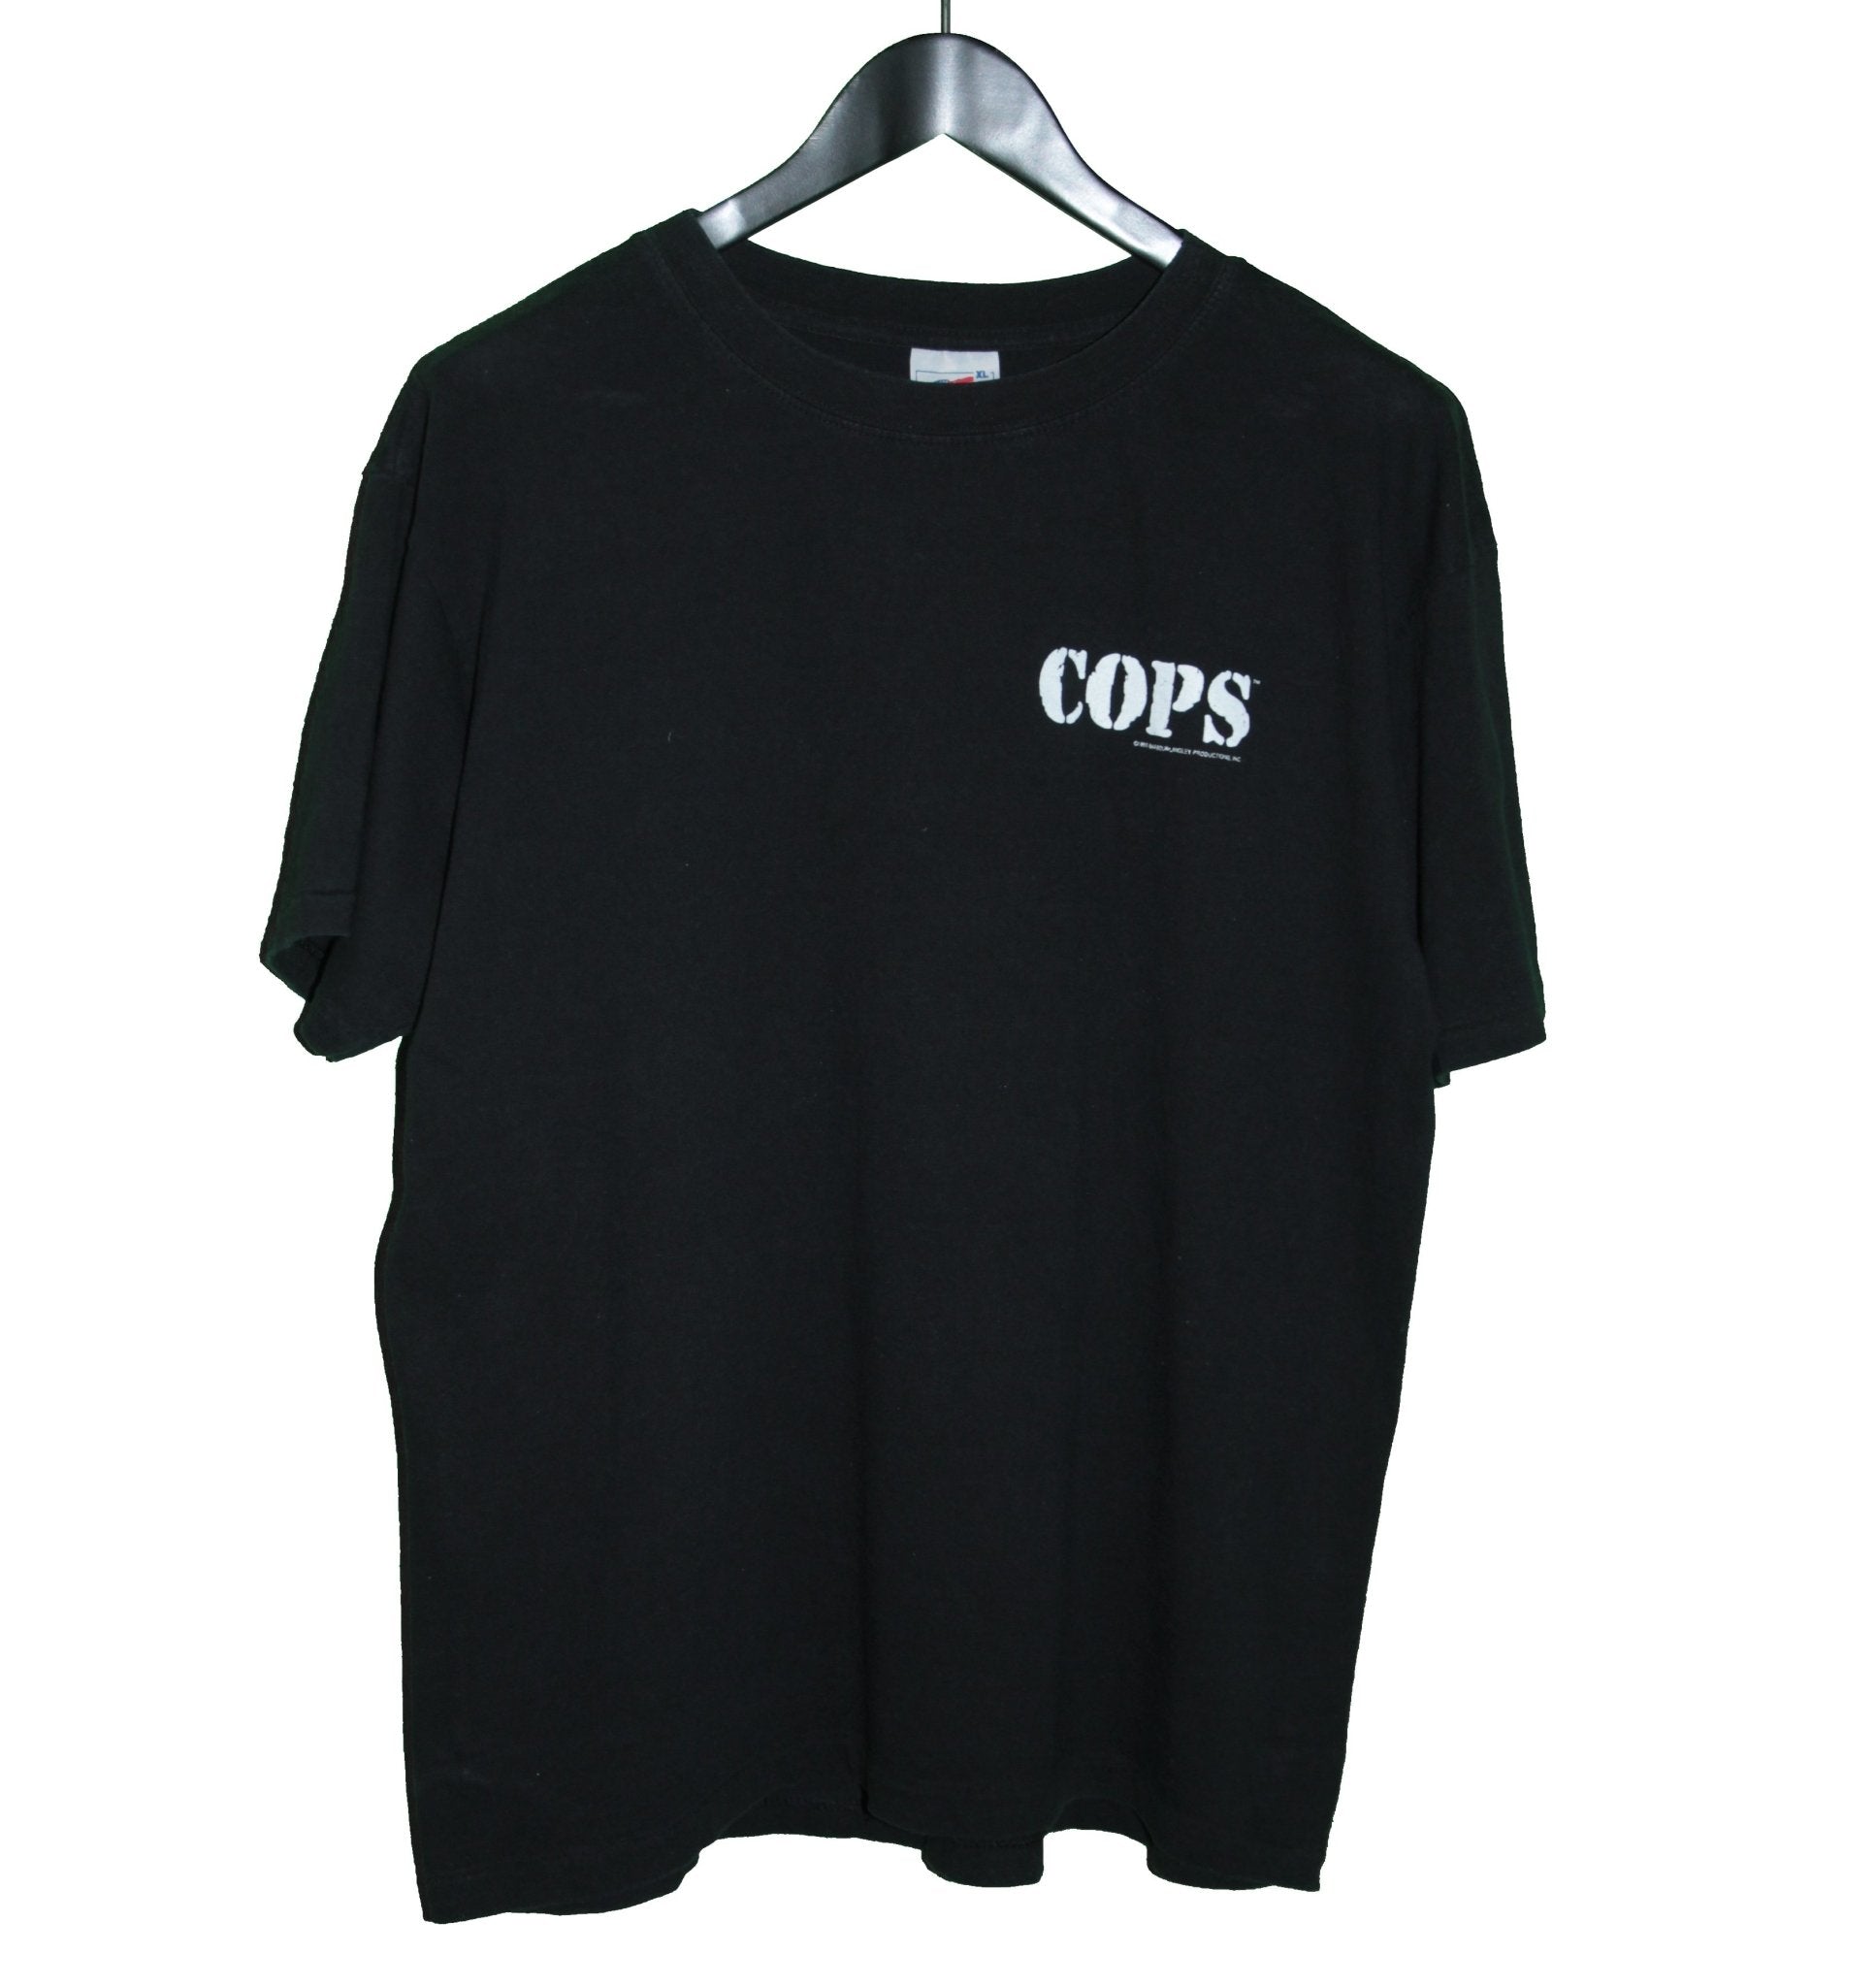 COPS 1996 Promo TV Shirt - Faded AU